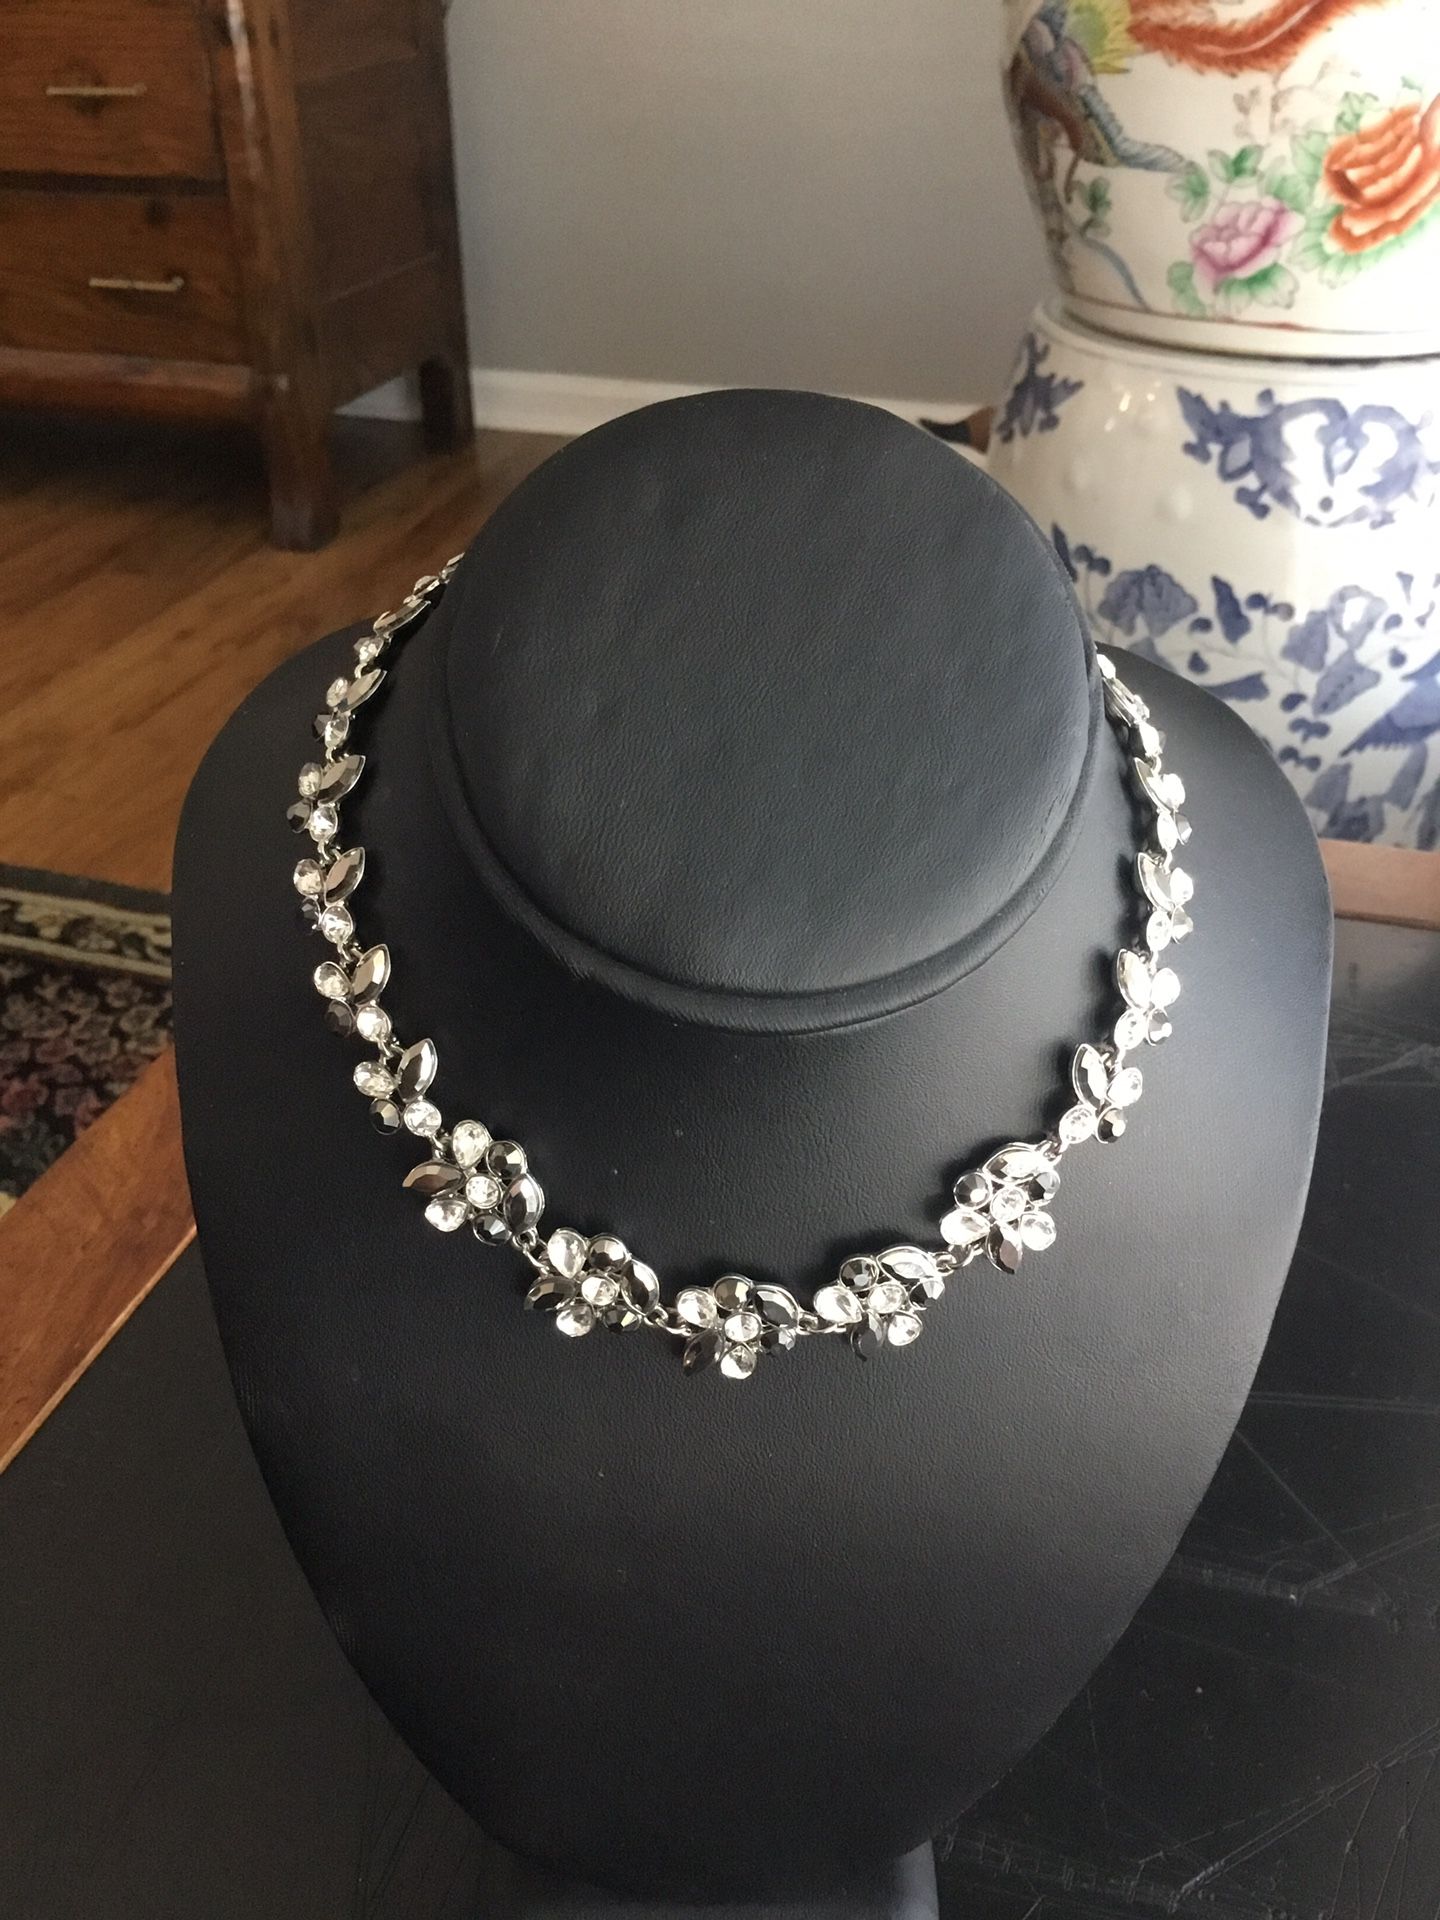 Silver Tone Clear & Dark Rhinestone Collar Choker Style Necklace